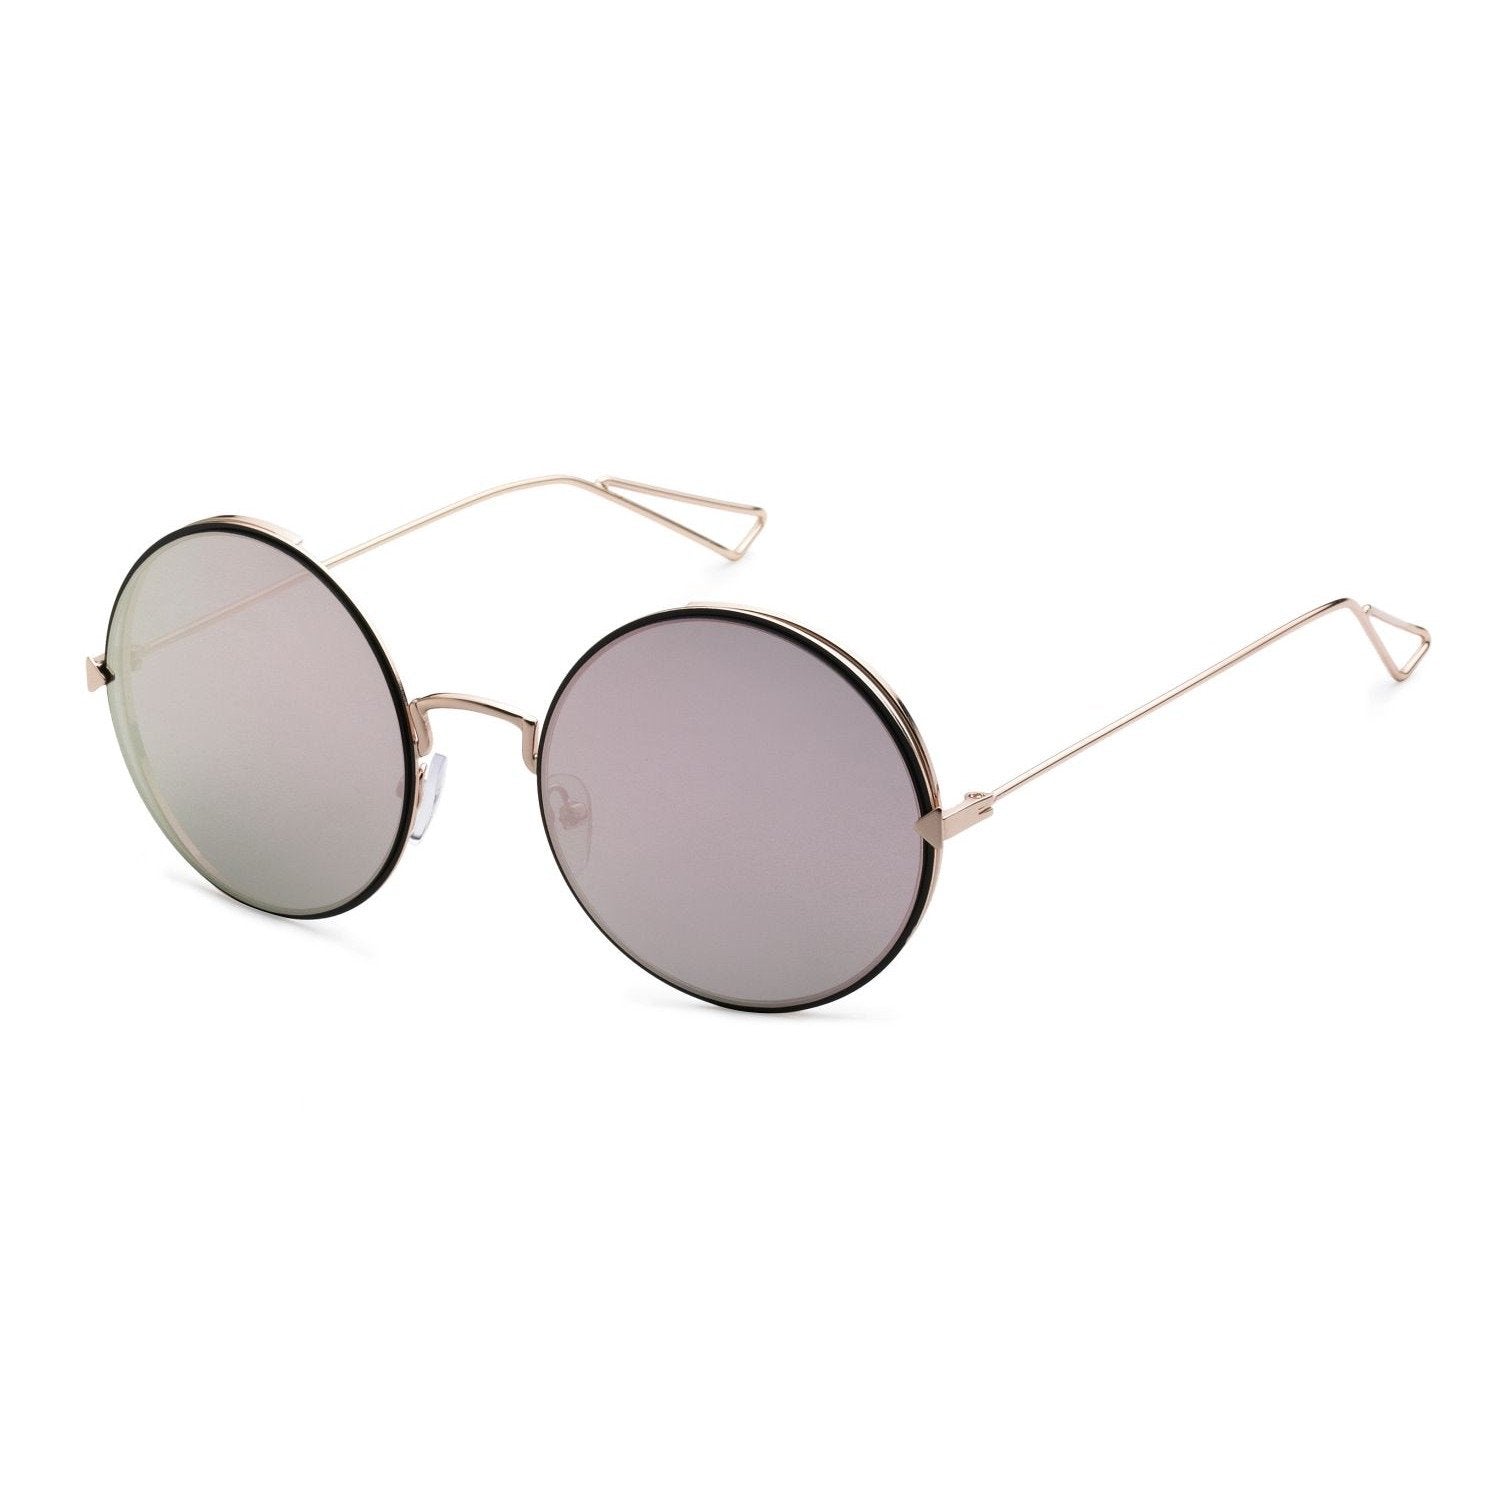 “Club Round” Sunglasses - Weekend Shade Sunglasses